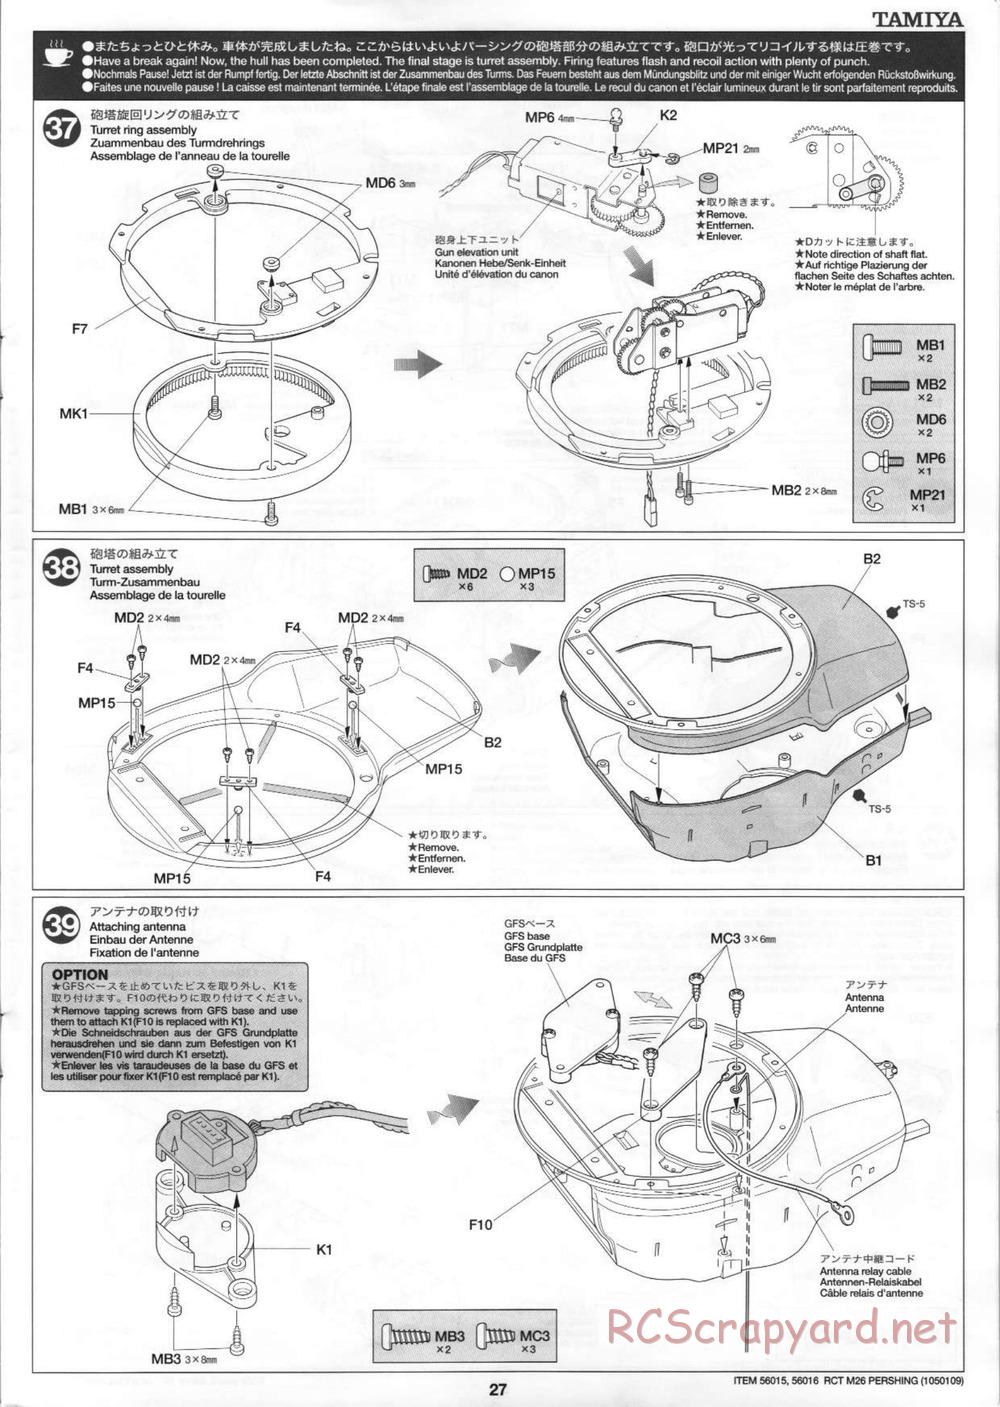 Tamiya - M26 Pershing - 1/16 Scale Chassis - Manual - Page 27